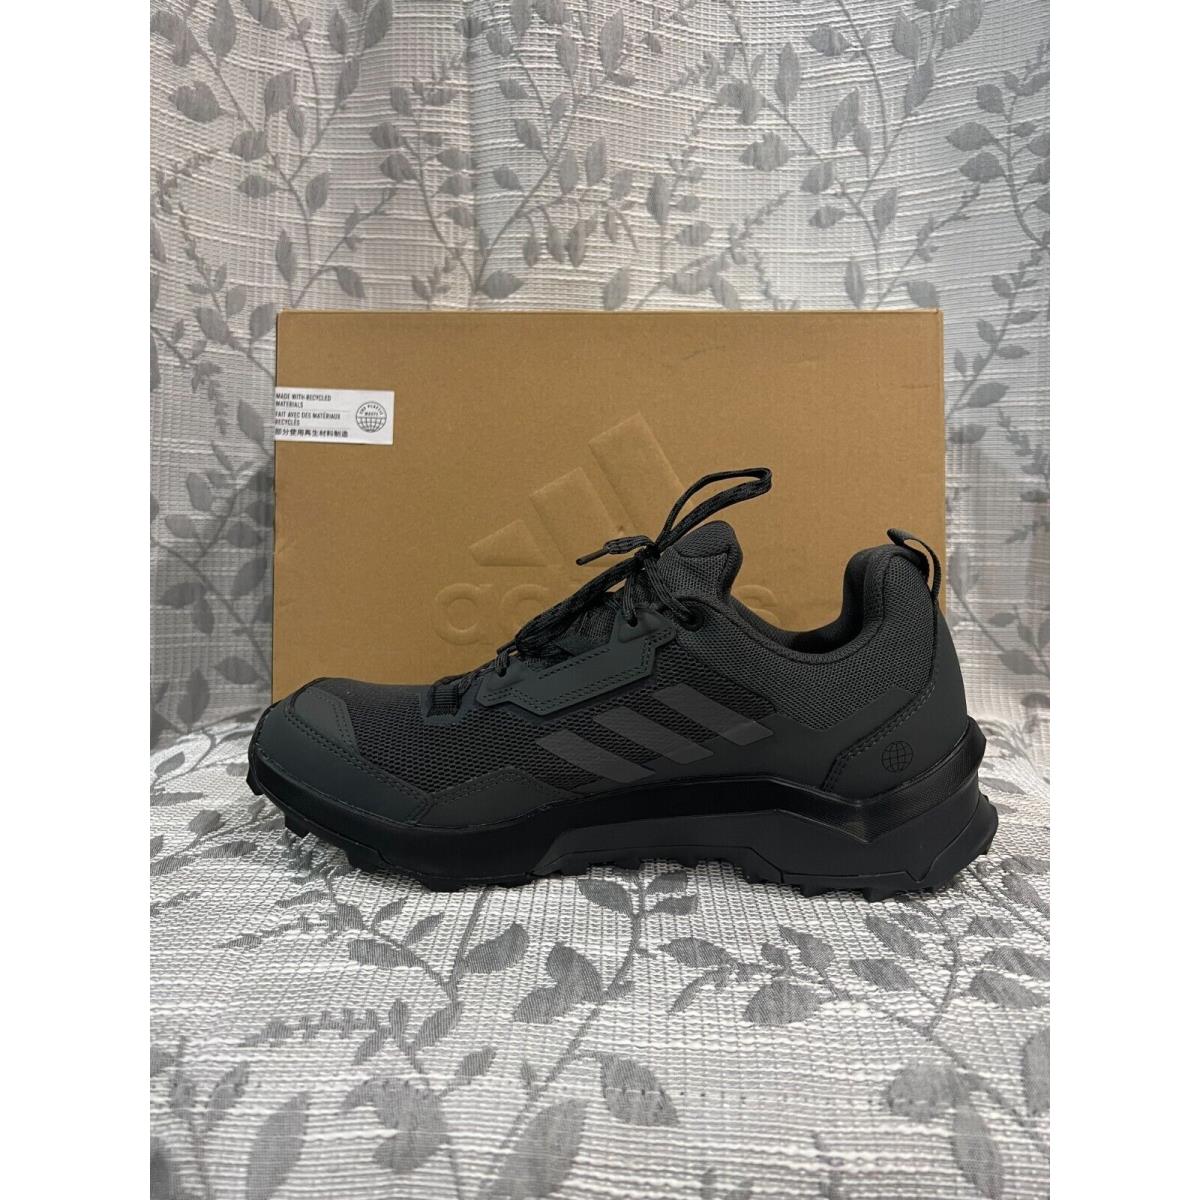 Adidas shoes  - Carbon/Grey Four 2